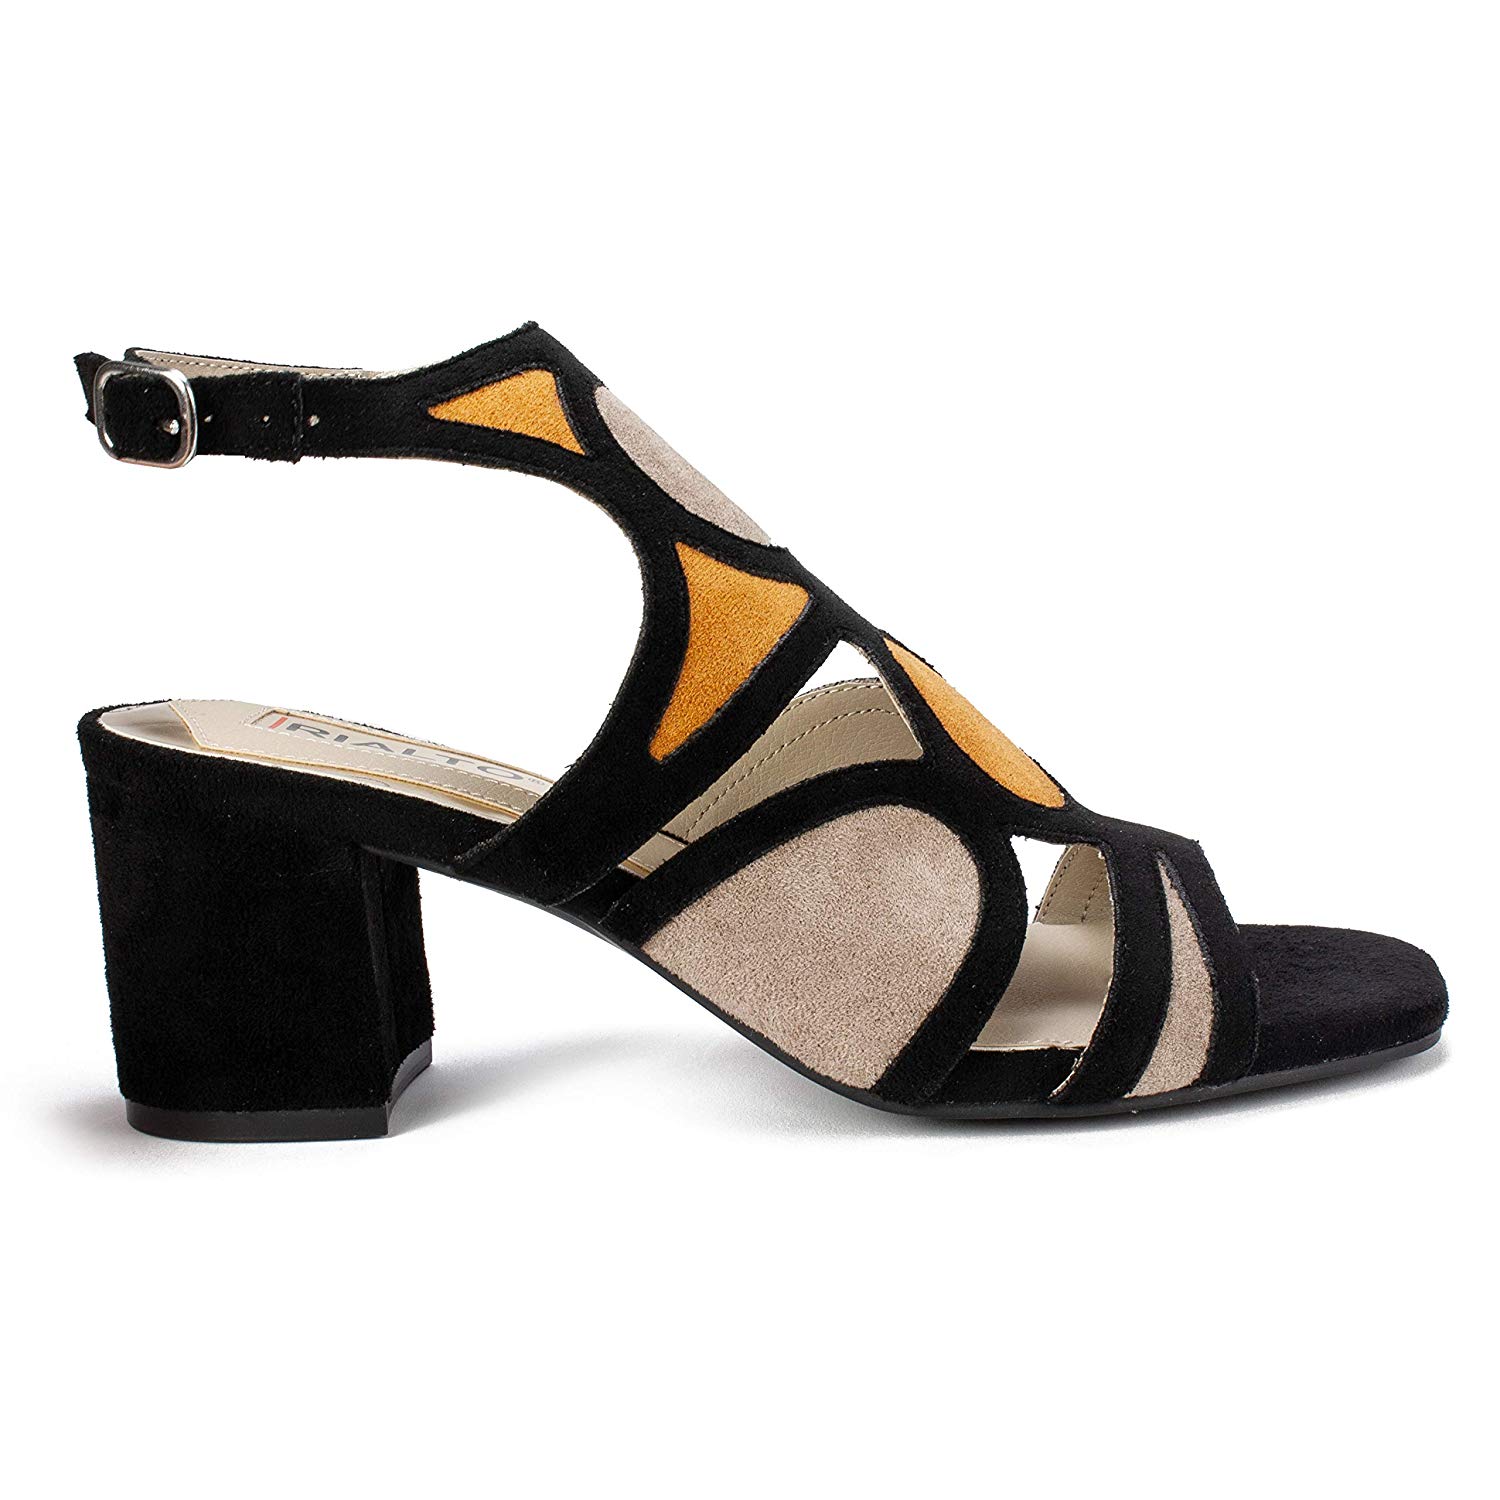 RIALTO Shoes Saffron Women's Sandal, Marigold, Size 6.5 | eBay